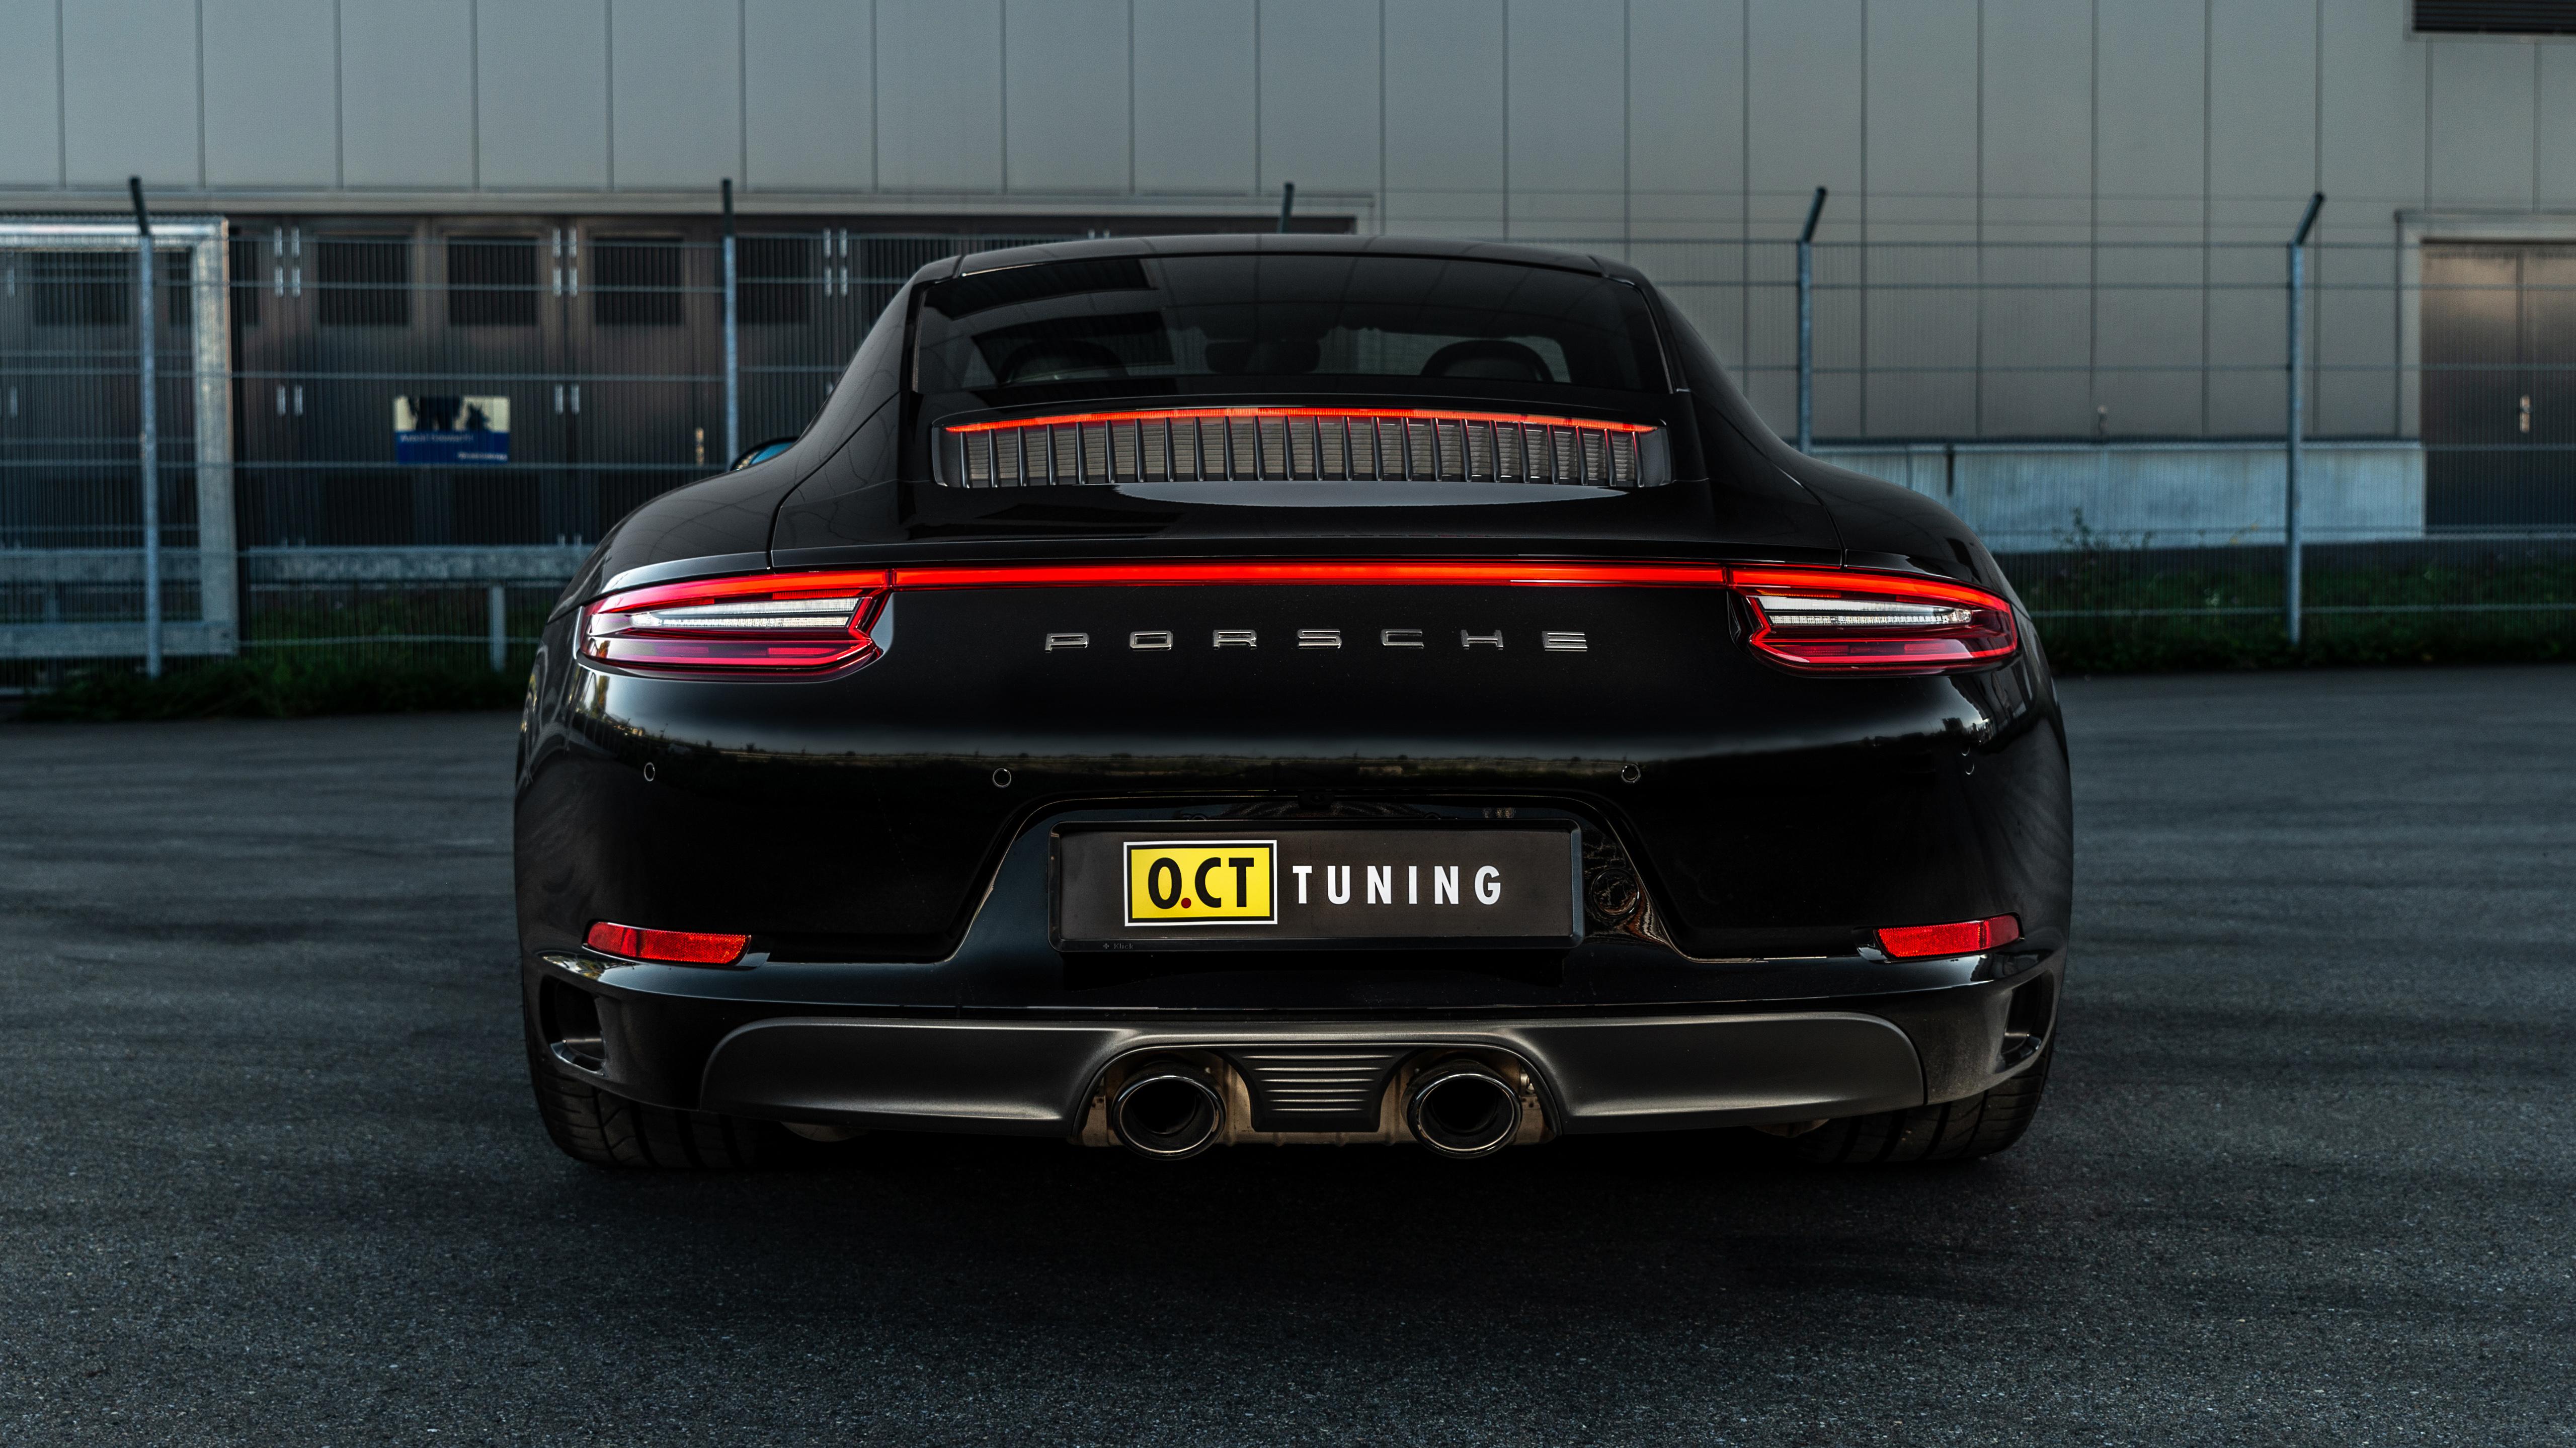 Oct Tuning Porsche Carrera Gts Spezial 4k Wallpaper